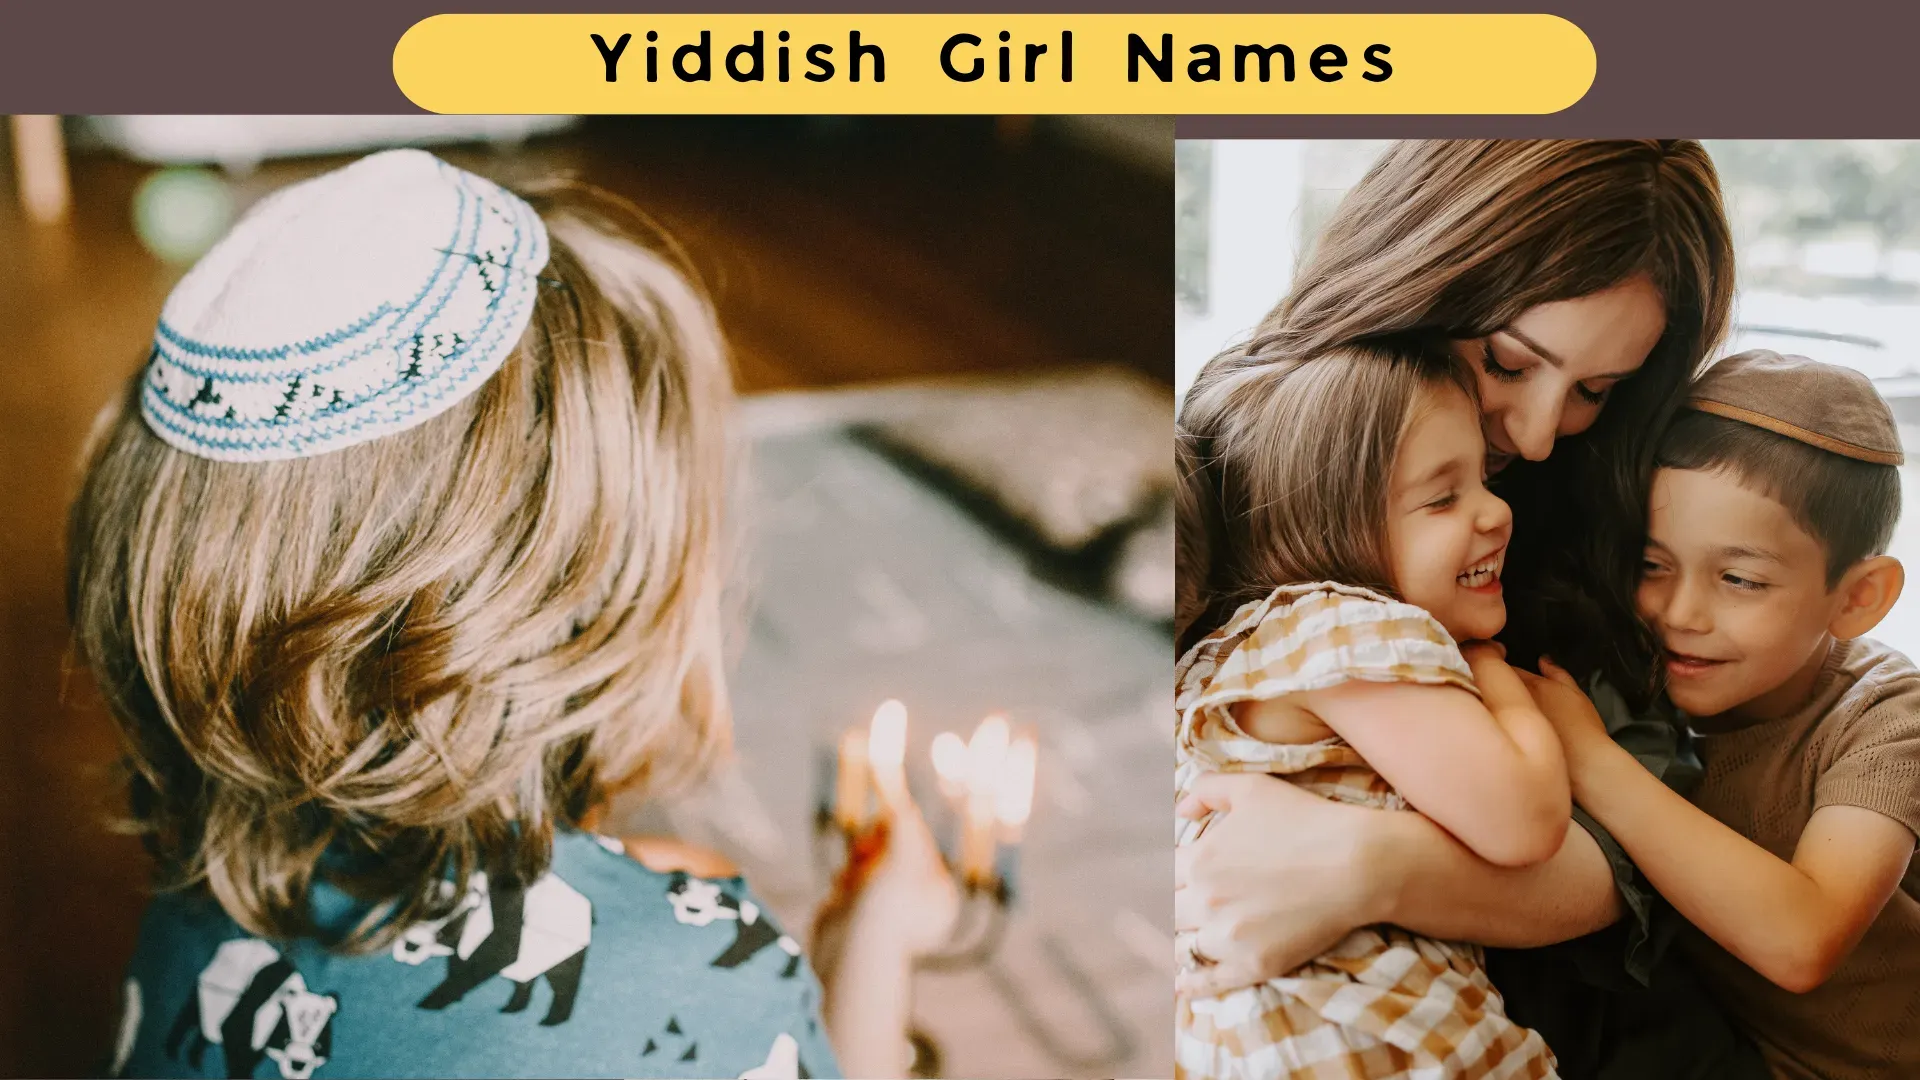 Yiddish Girl Names